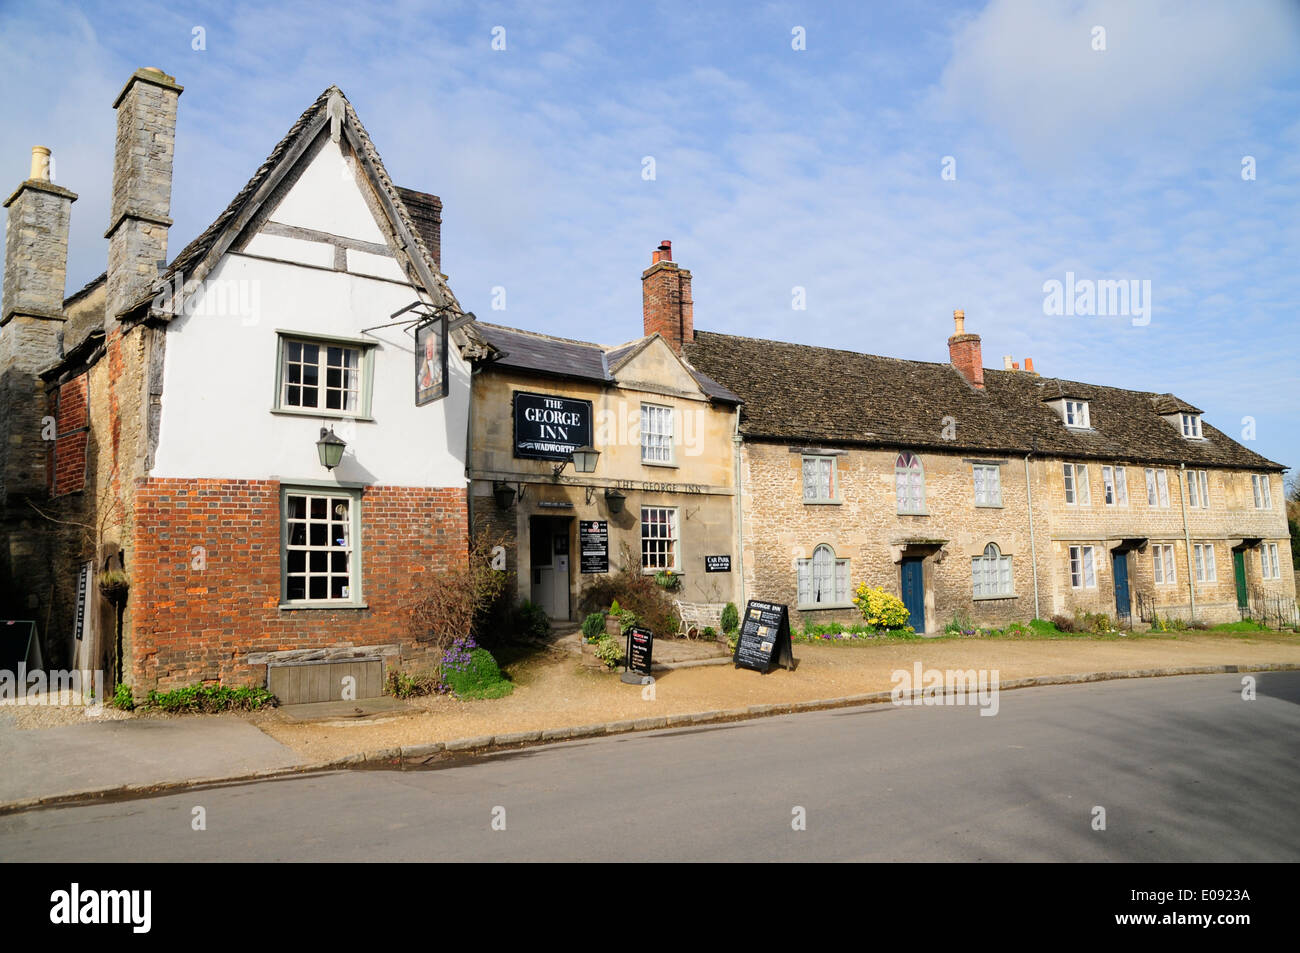 The George Inn pub, Lacock, Wiltshire, England Stock Photo